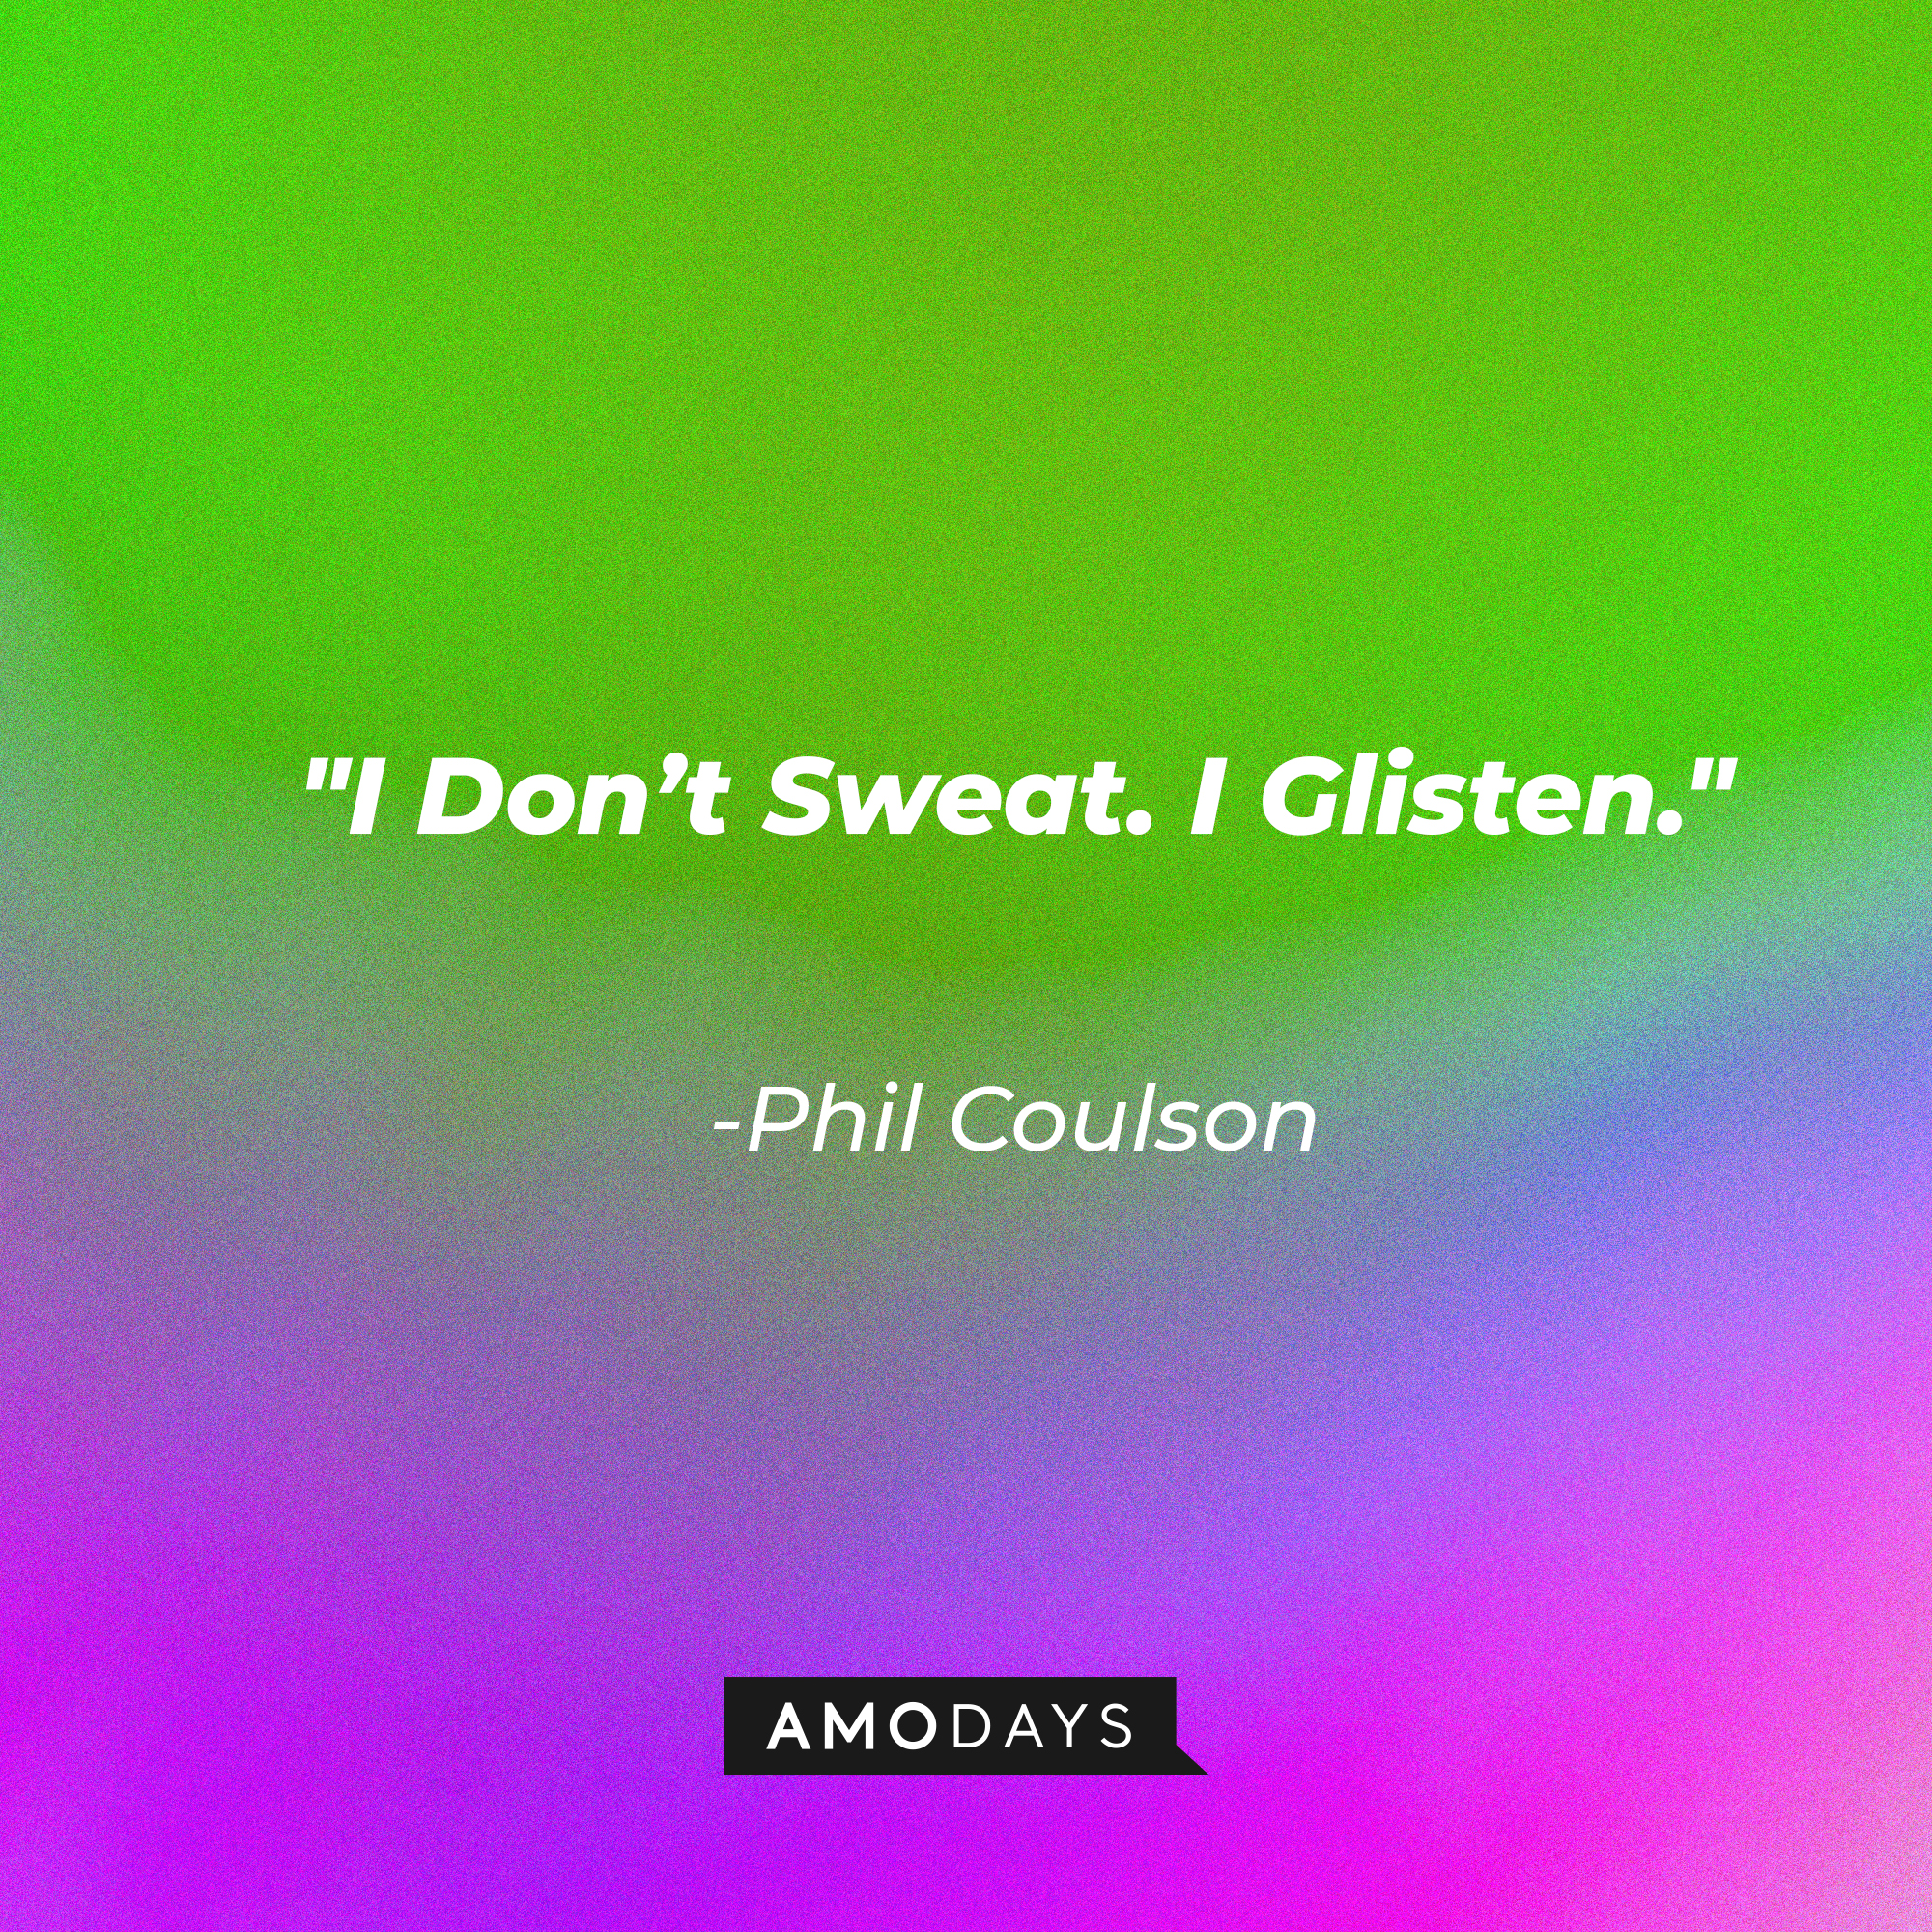 Phil Coulson's quote: "I Don't Sweat. I Glisten." | Source: Amodays